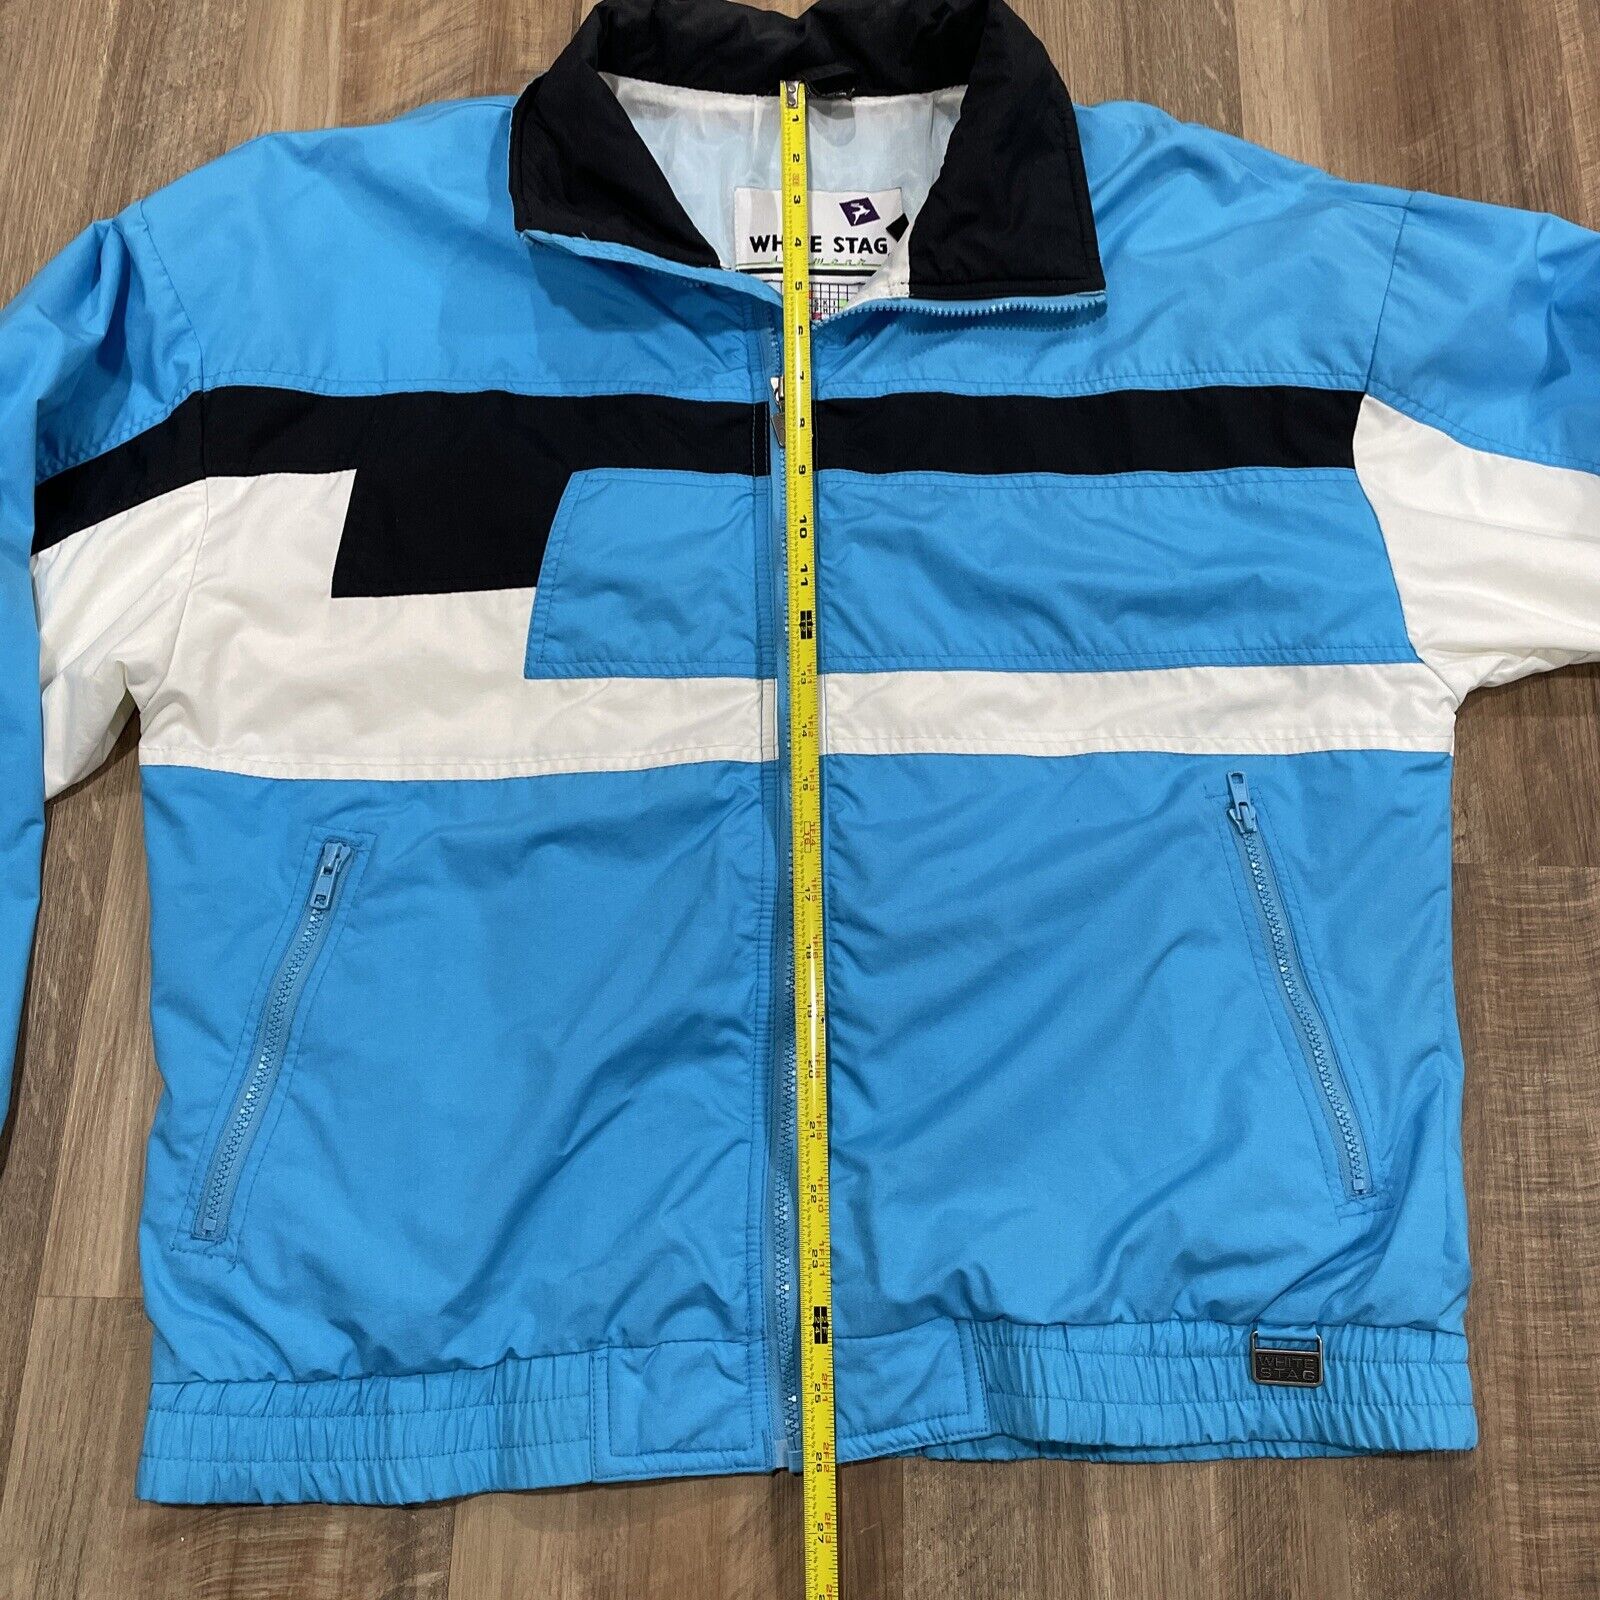 Vintage 80s 90s White Stag Skiwear Ski Graphics Jacket Size M Blue White  Black